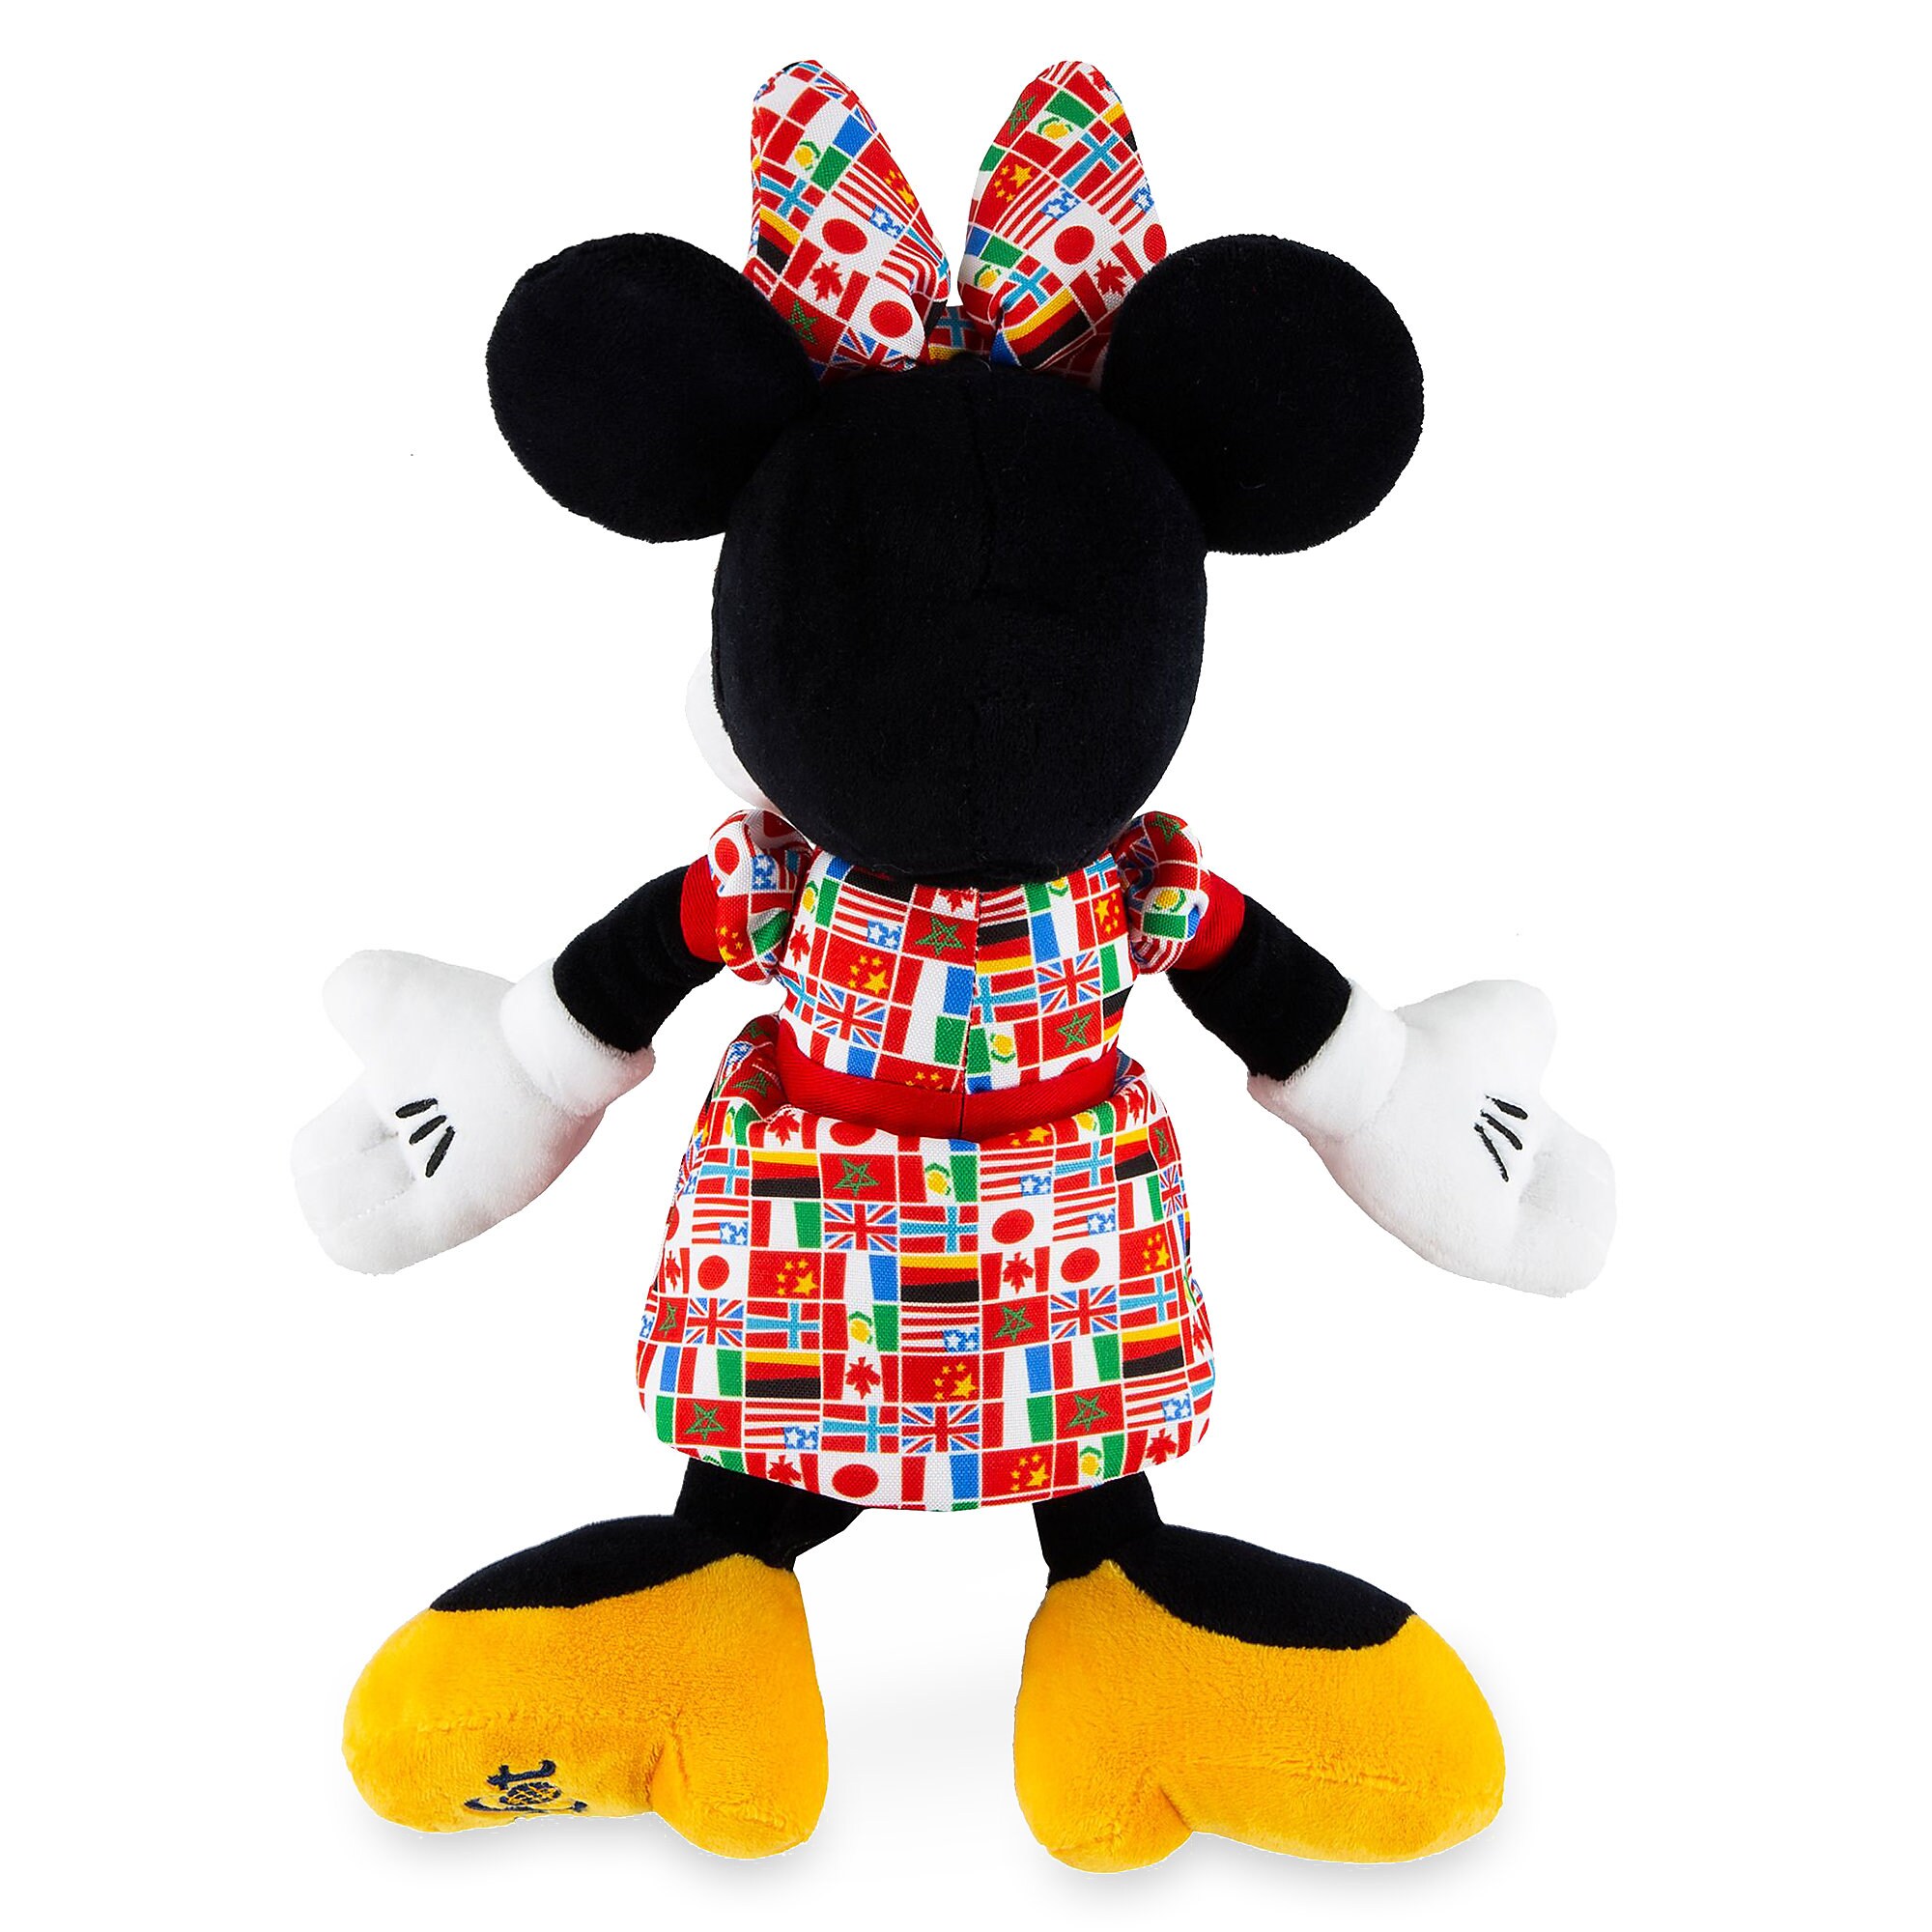 Minnie Mouse Epcot Flags Plush - 11''